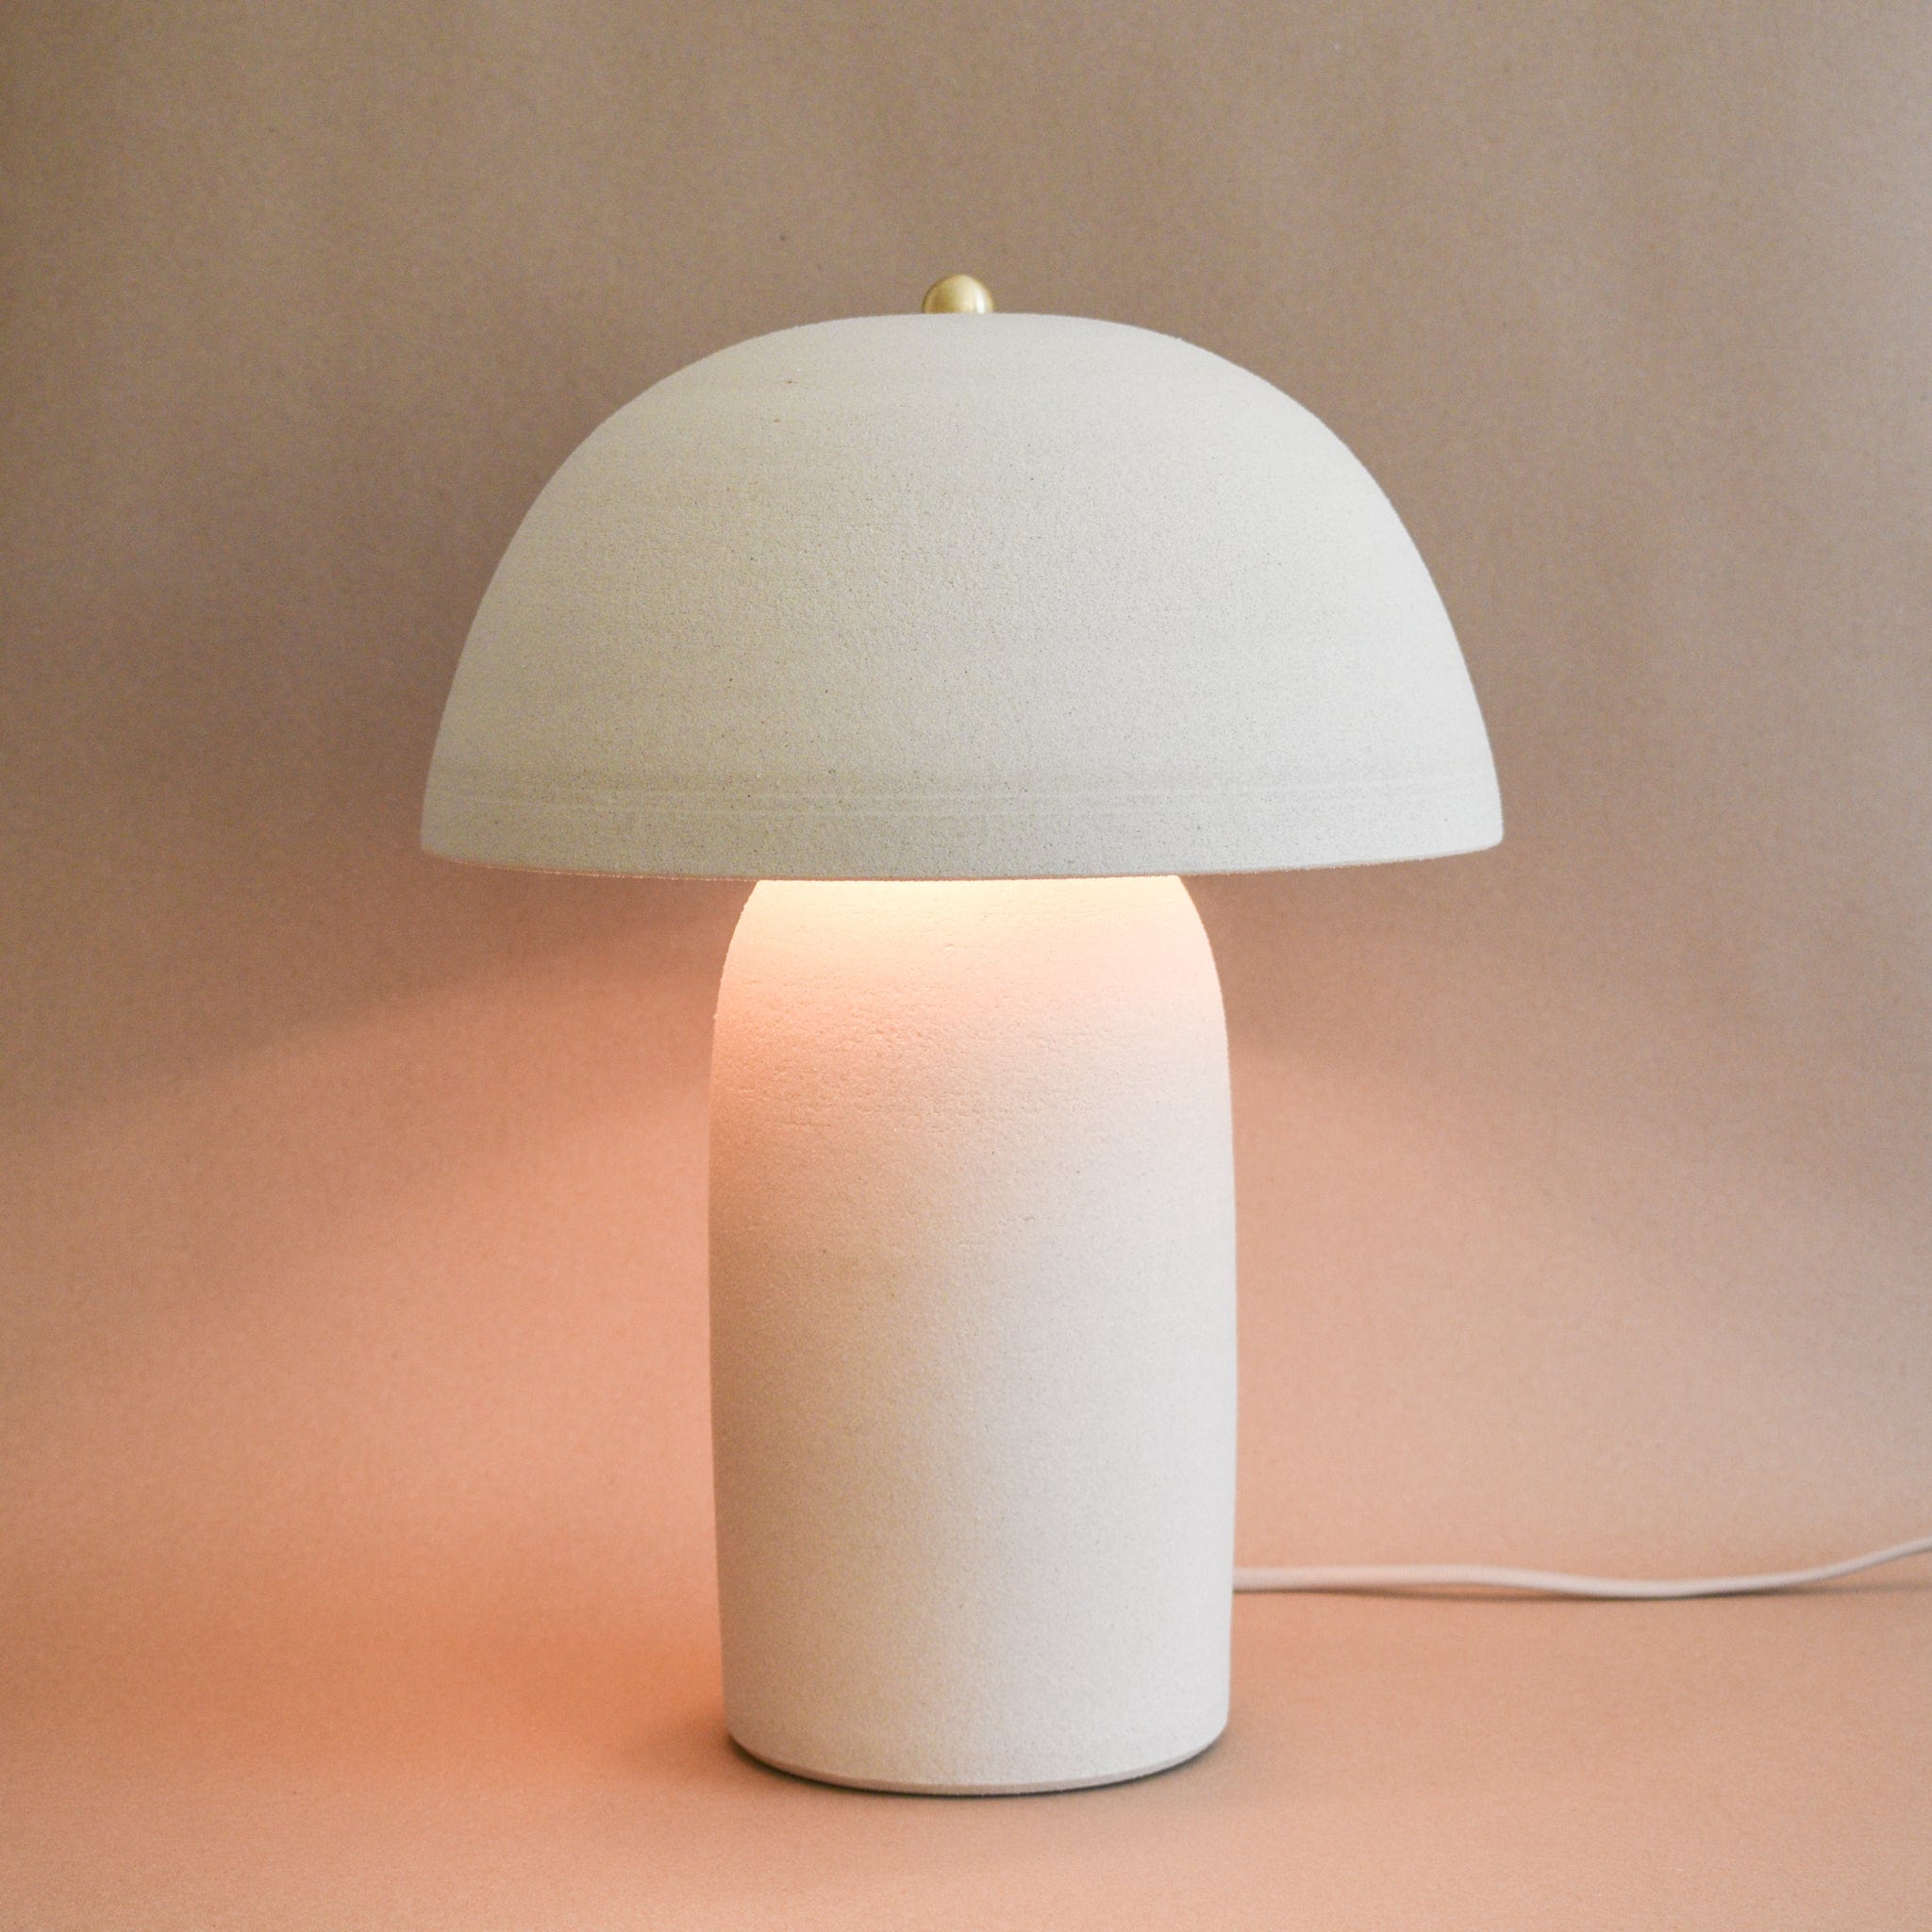 Ceramicah Decor Medium Tera Lamp by Ceramicah - Stone | CURBSIDE PICK UP ONLY